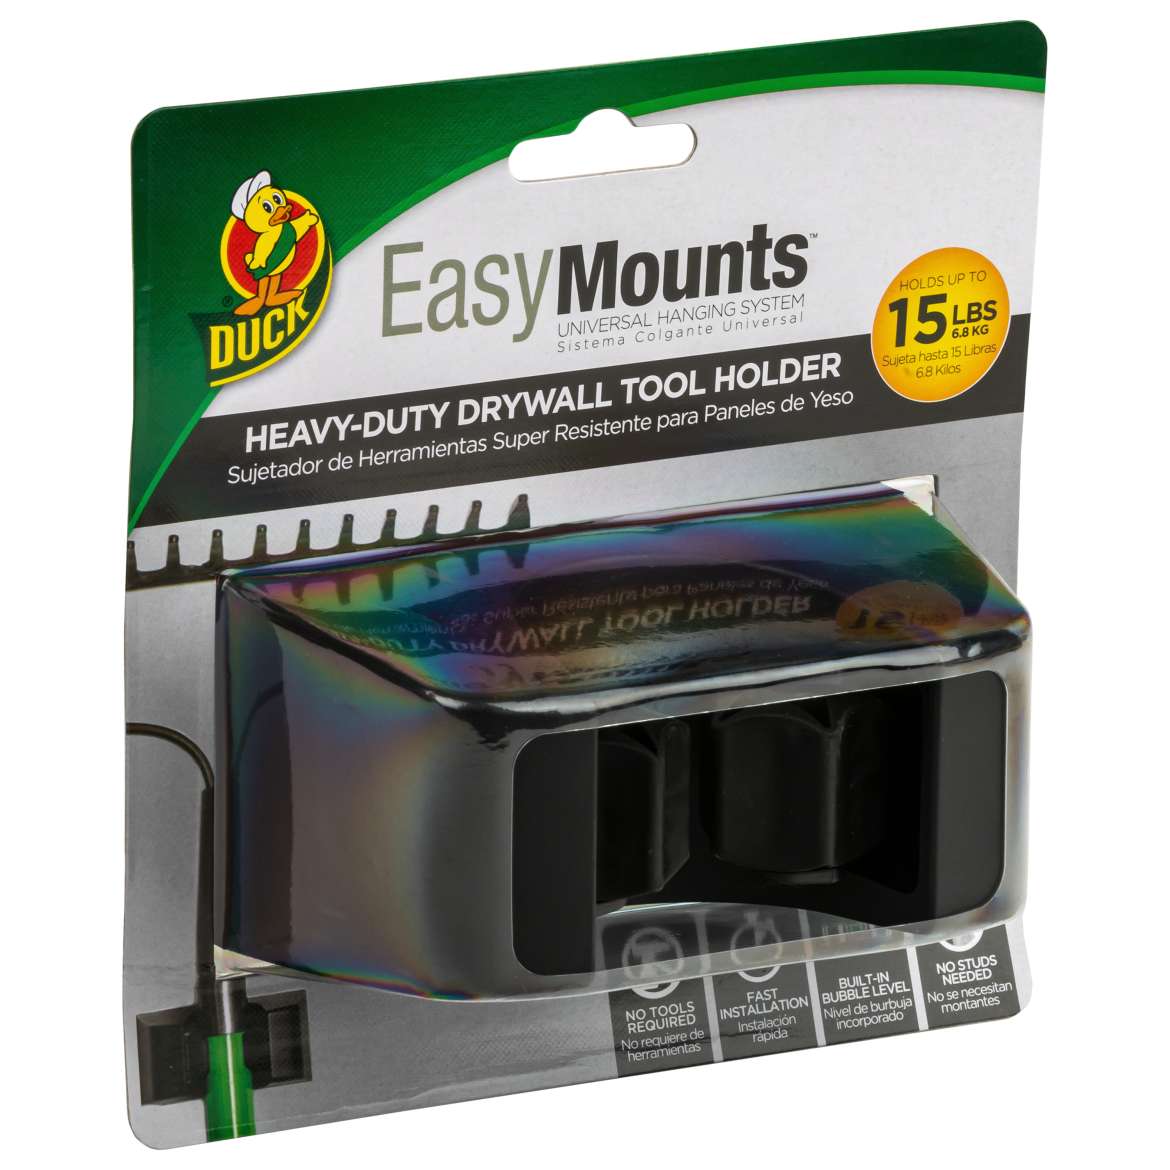 Duck® EasyMounts® Heavy-Duty Drywall Tool Holder